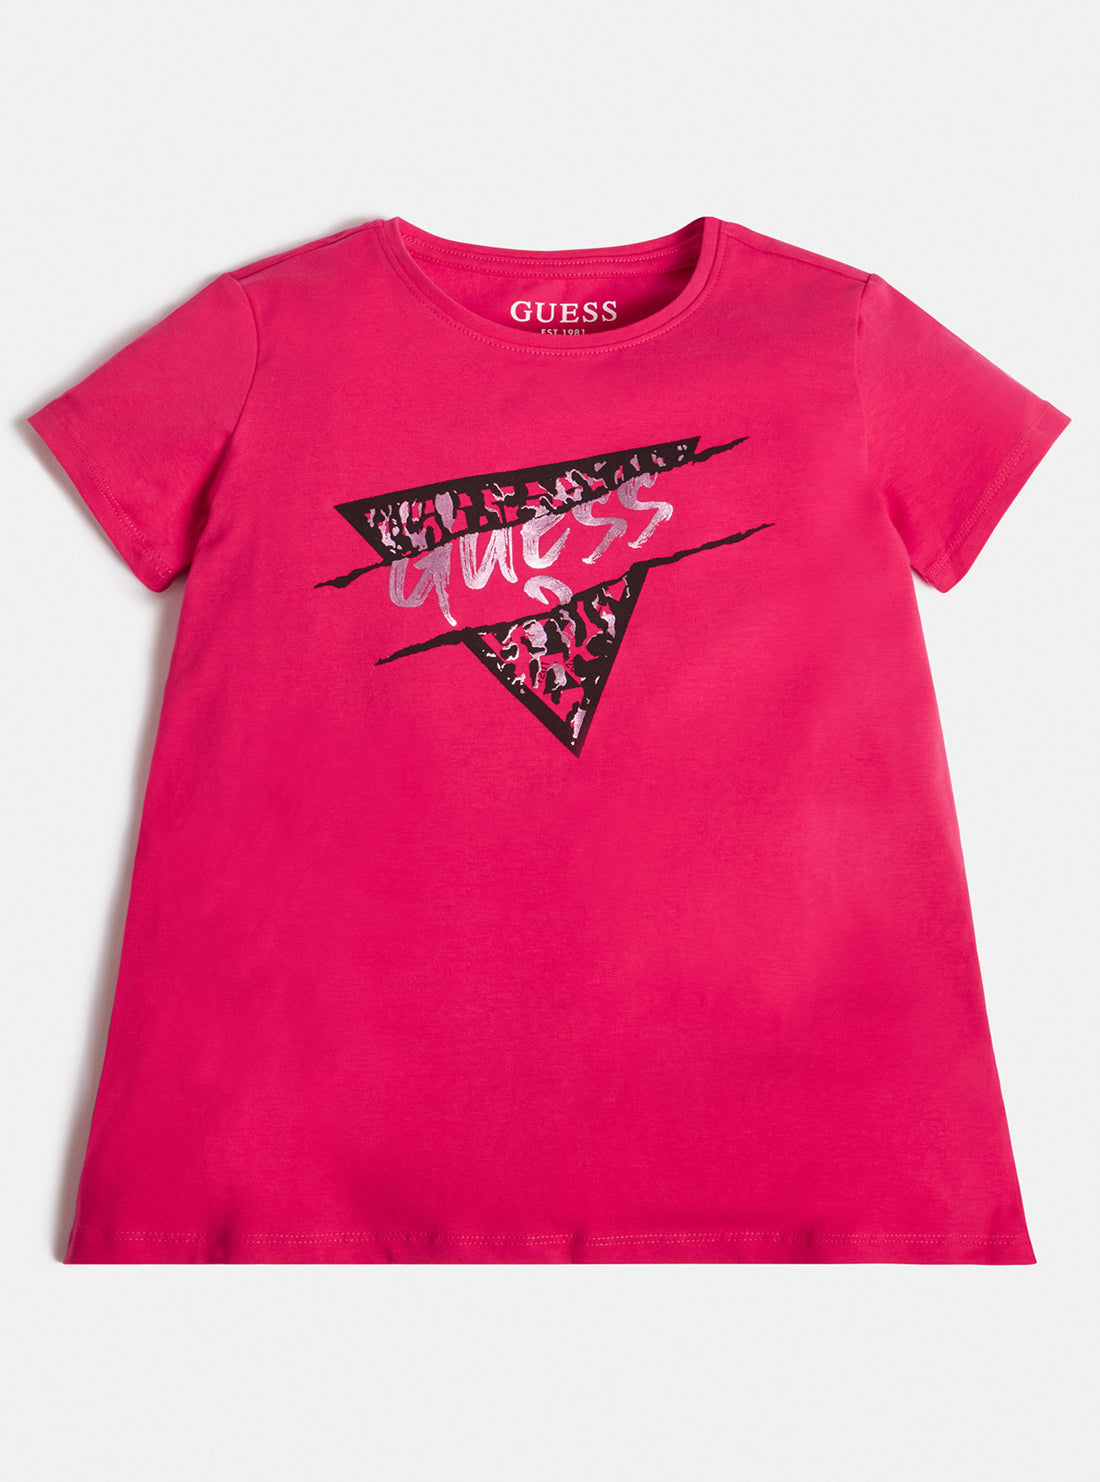 GUESS Big Girls Pink Leopard Logo T-Shirt (7-16) J1BI01J1311 Front View